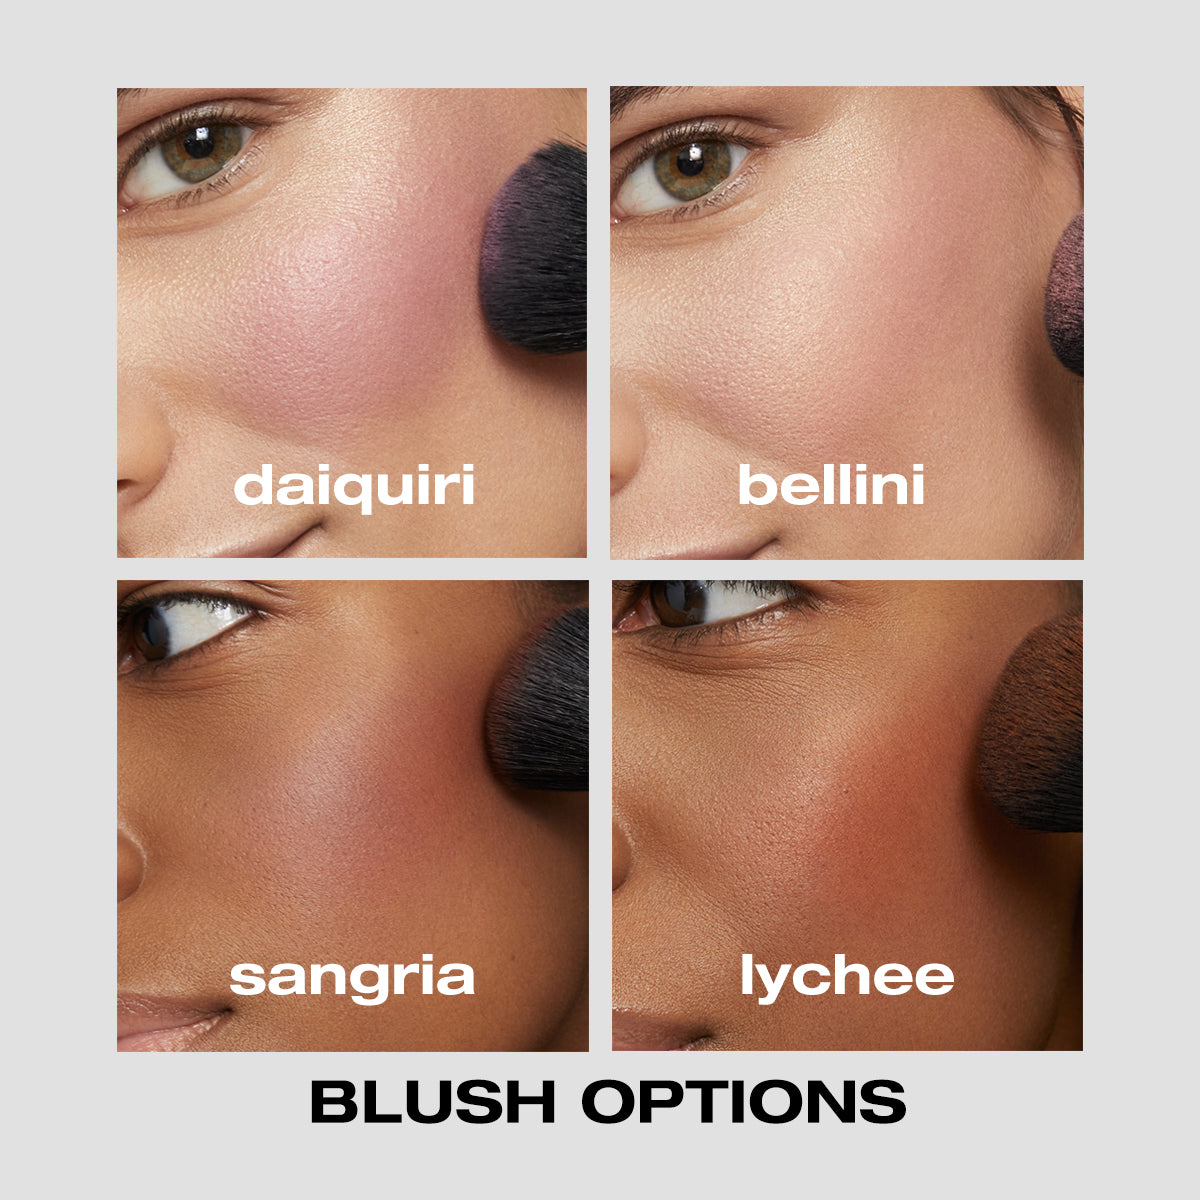 Blush options: daiquiri, bellini, sangria, lychee